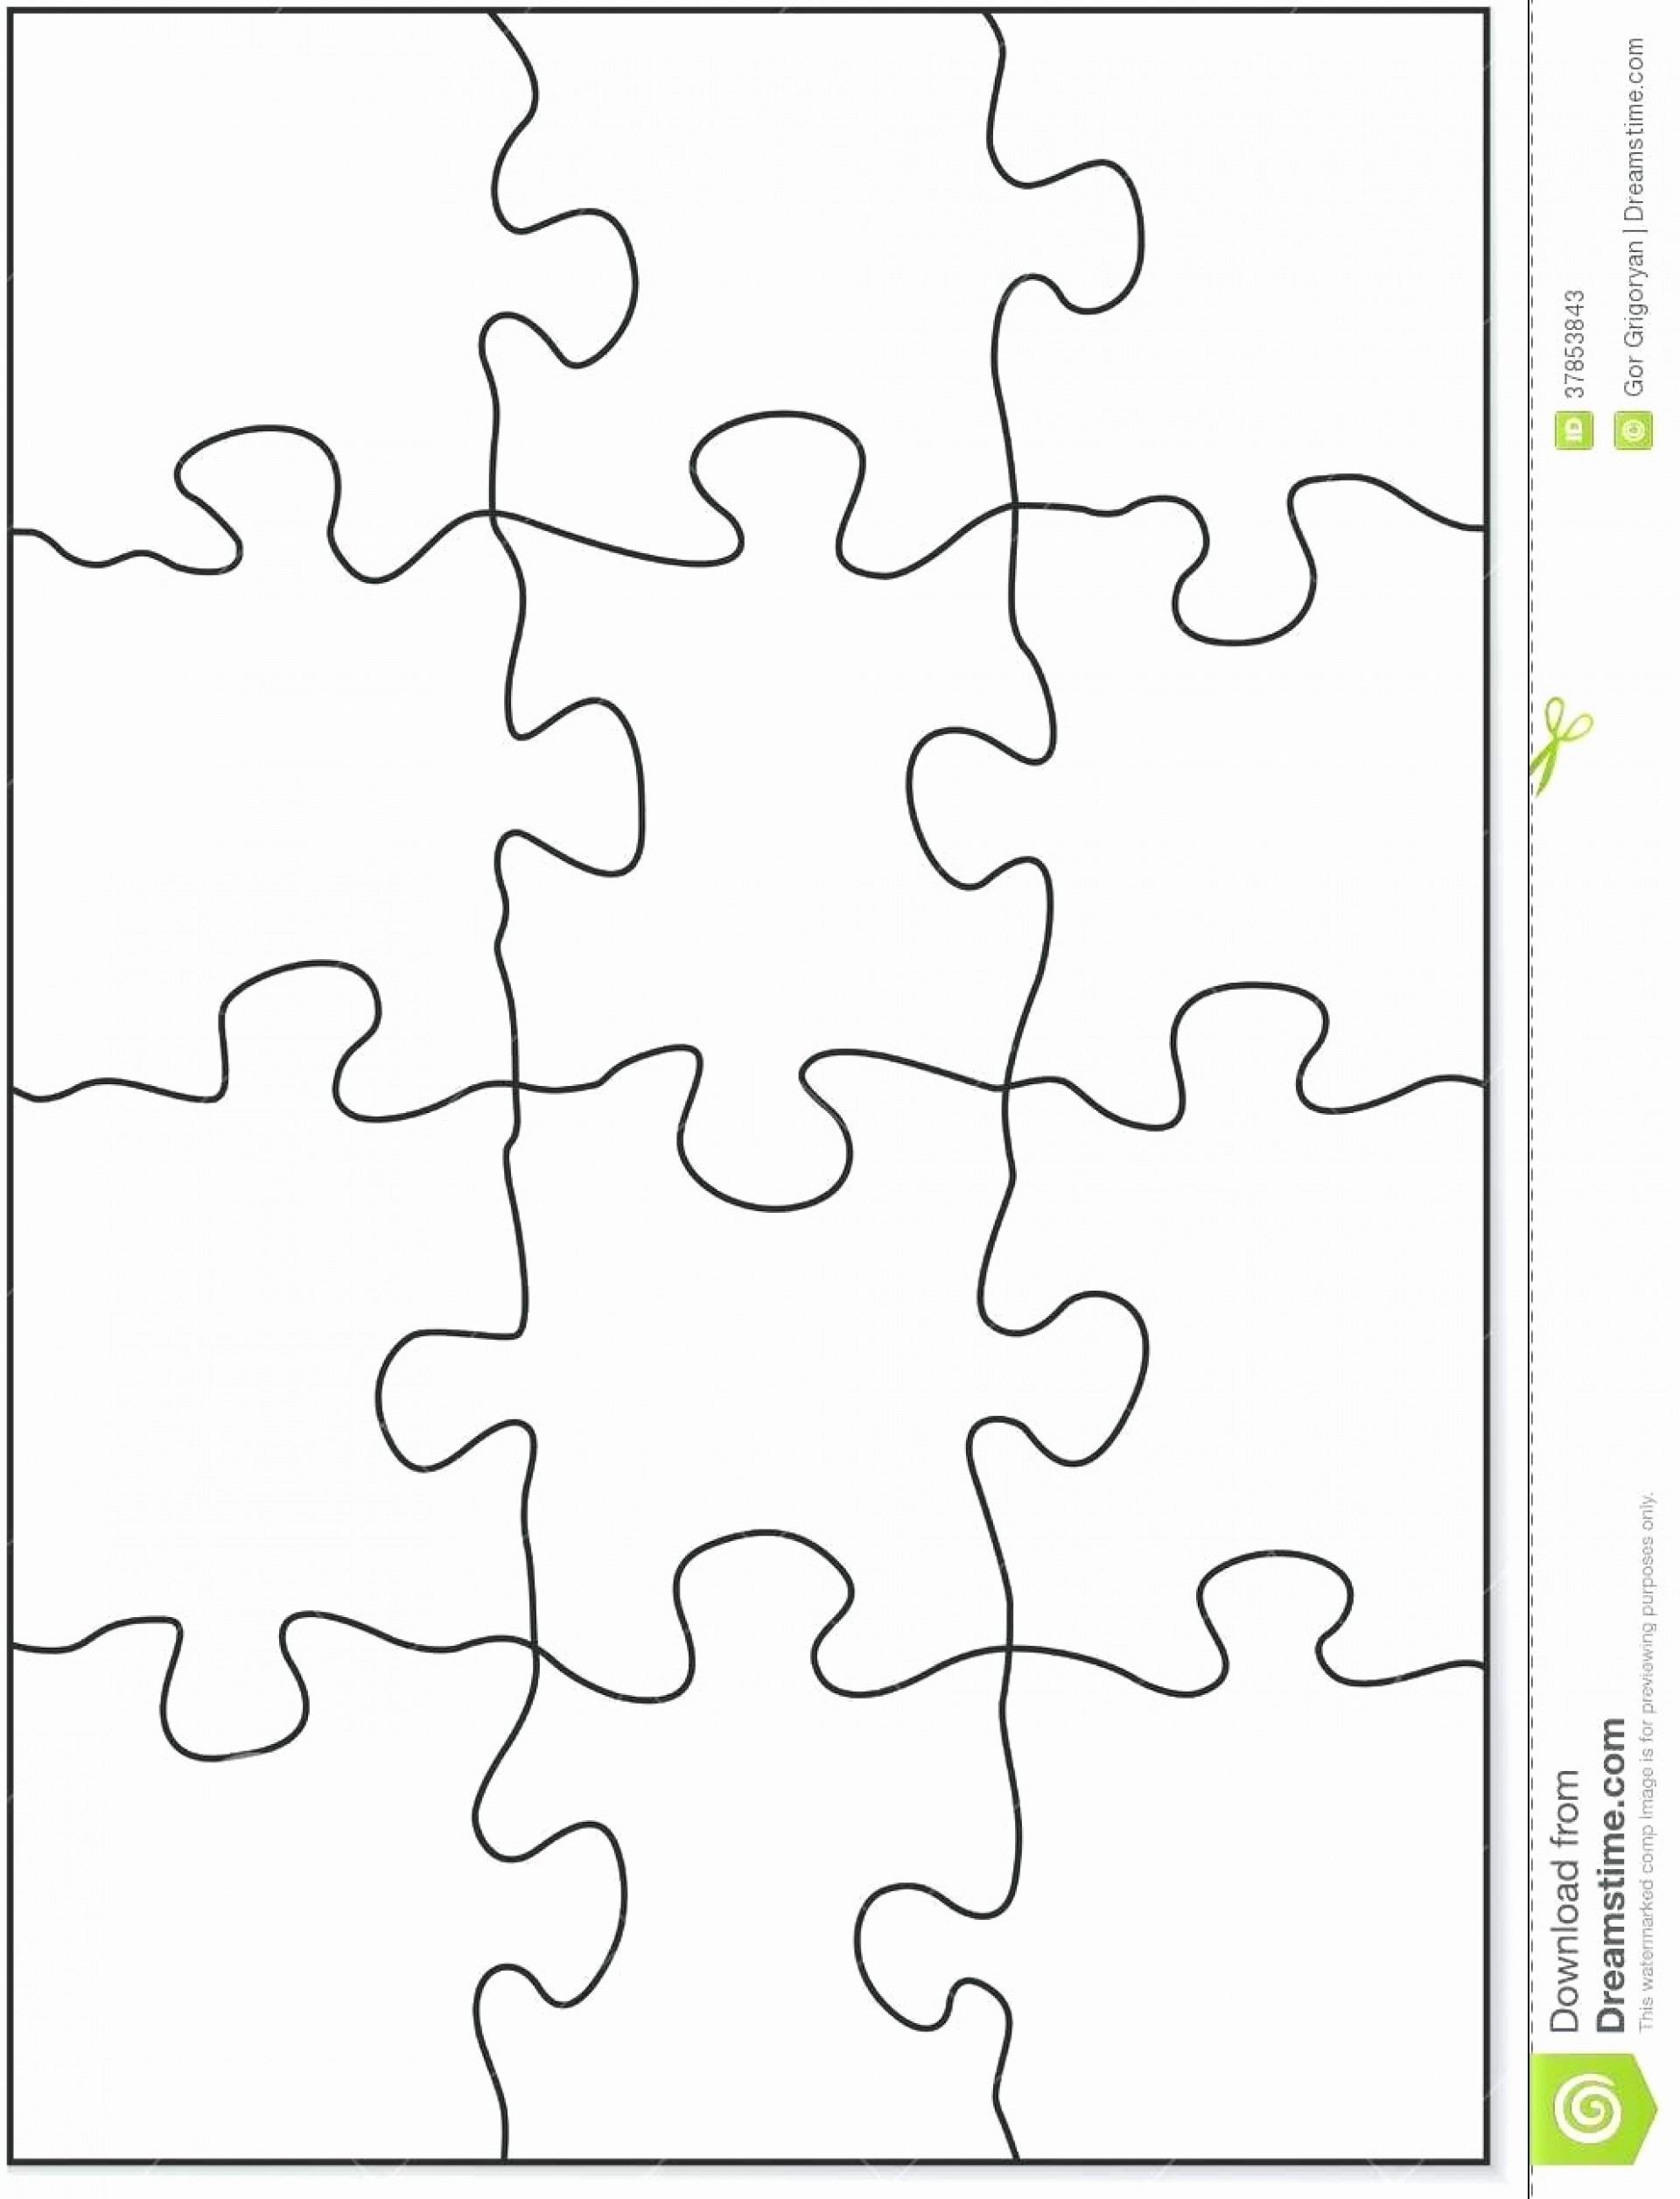 026 Template Ideas Blank Puzzle Pieces Free Vector Best 3 Piece Pdf - 5 Piece Printable Puzzle